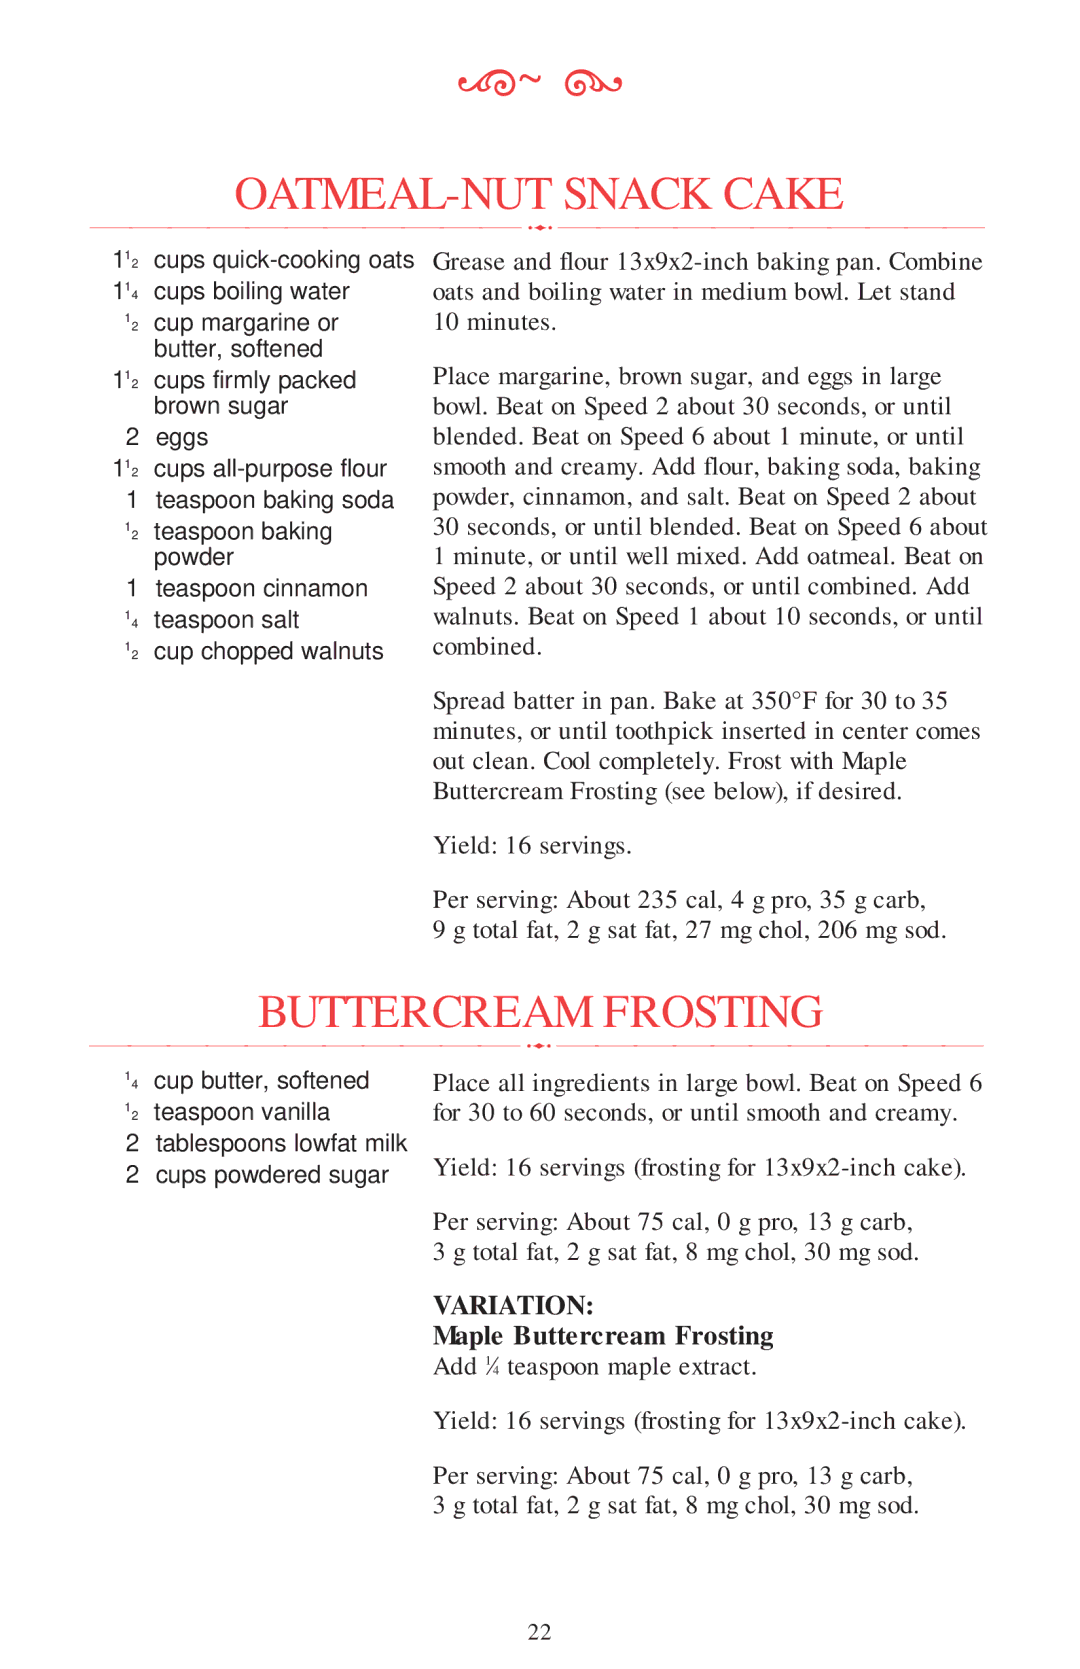 KitchenAid Mixer manual OATMEAL-NUT Snack Cake, Variation, Maple Buttercream Frosting 